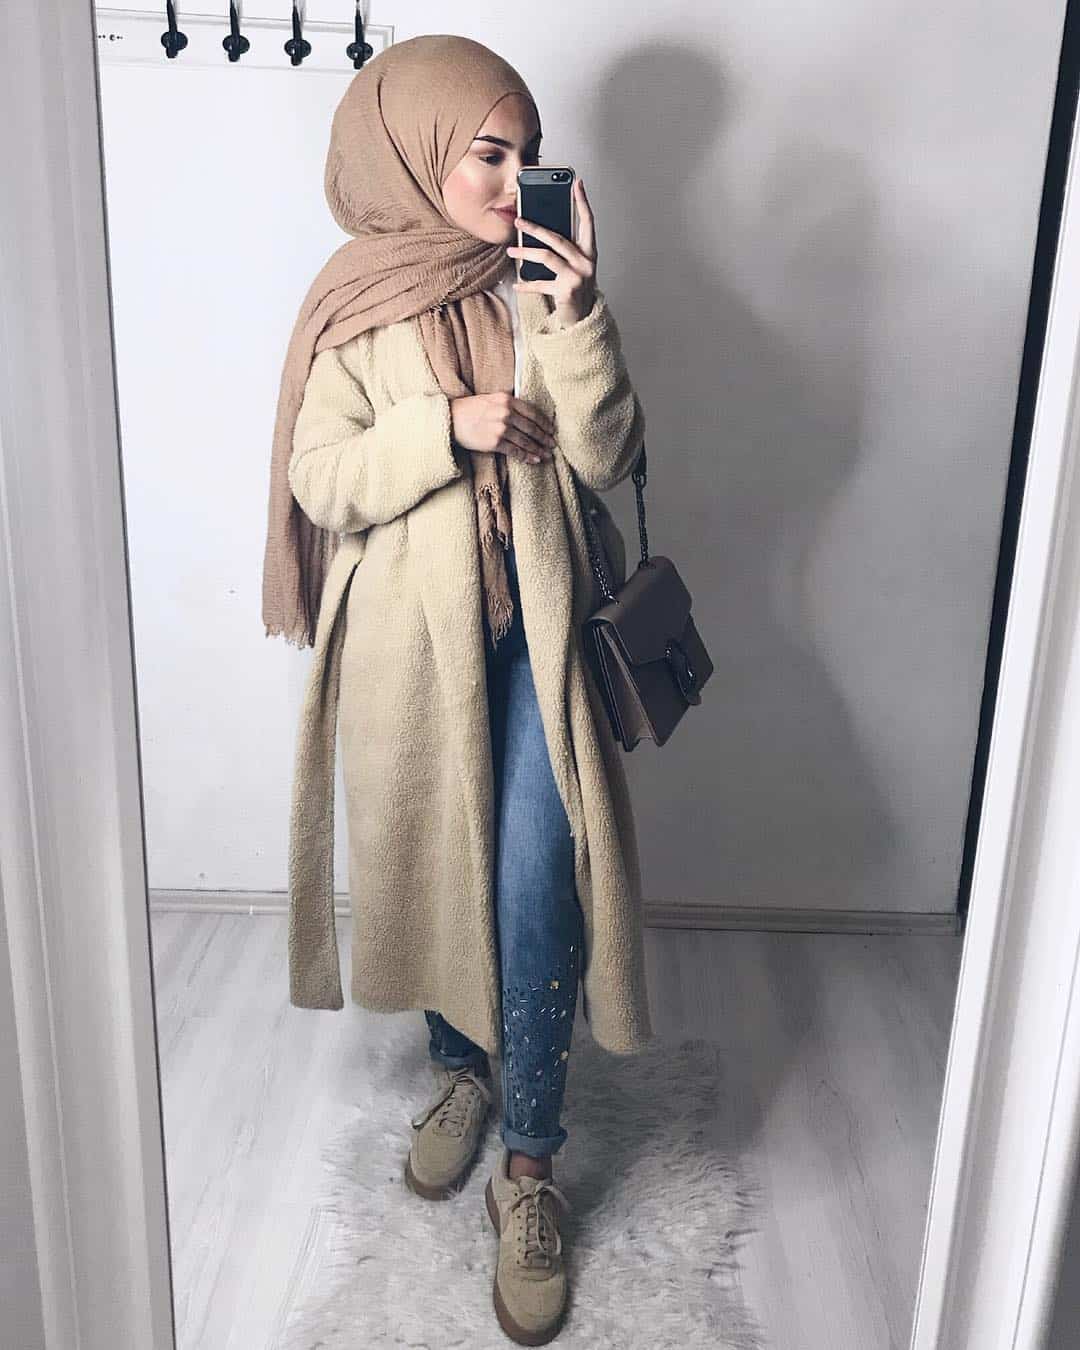 Blogger Of The Week: Sümeyra aka @sue.meyraa - Hijab Fashion Inspiration